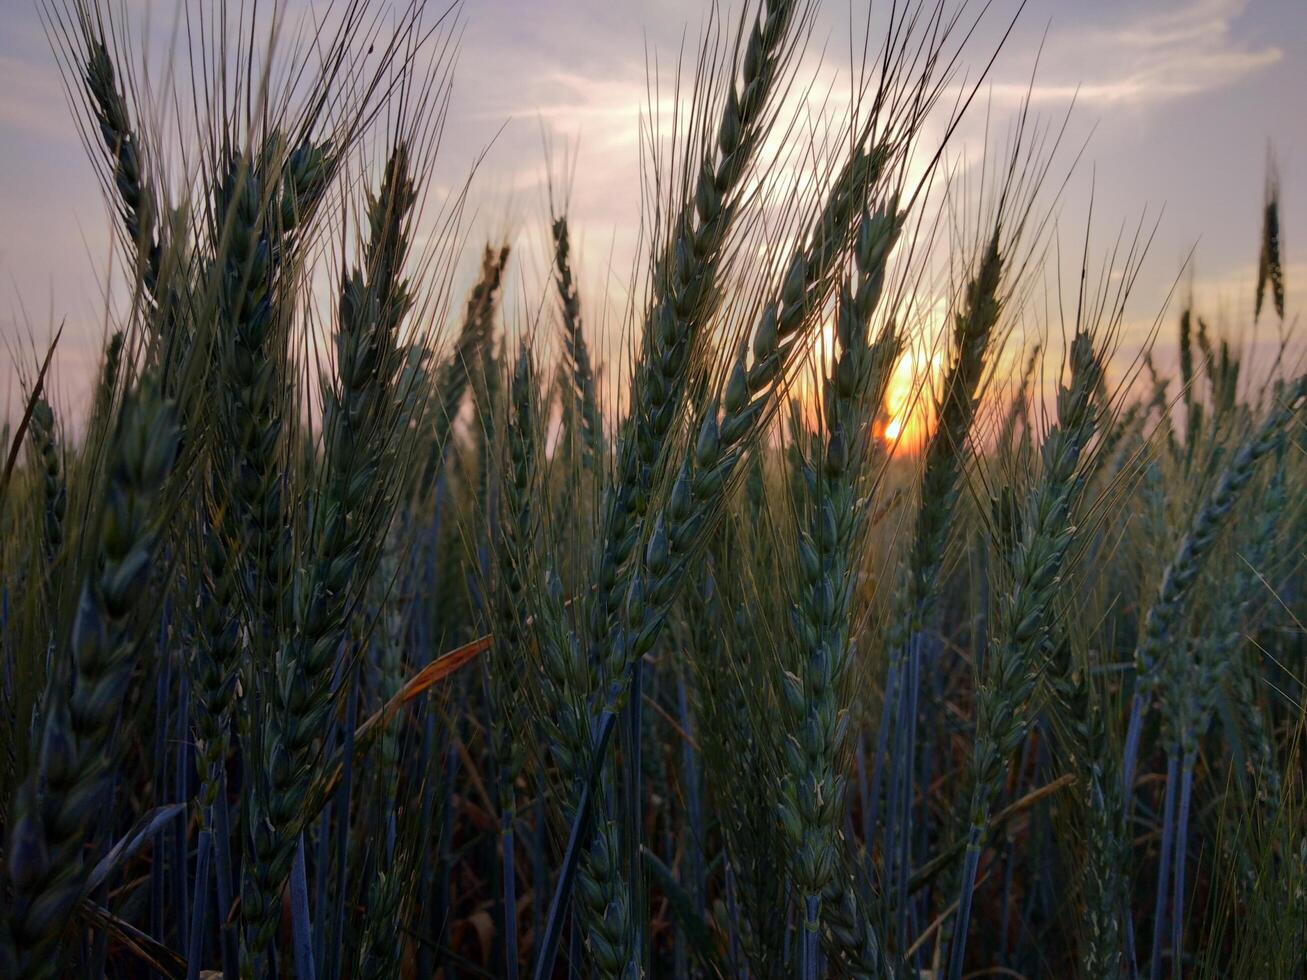 Green Wheat field panorama, wheat field, Crops field photo